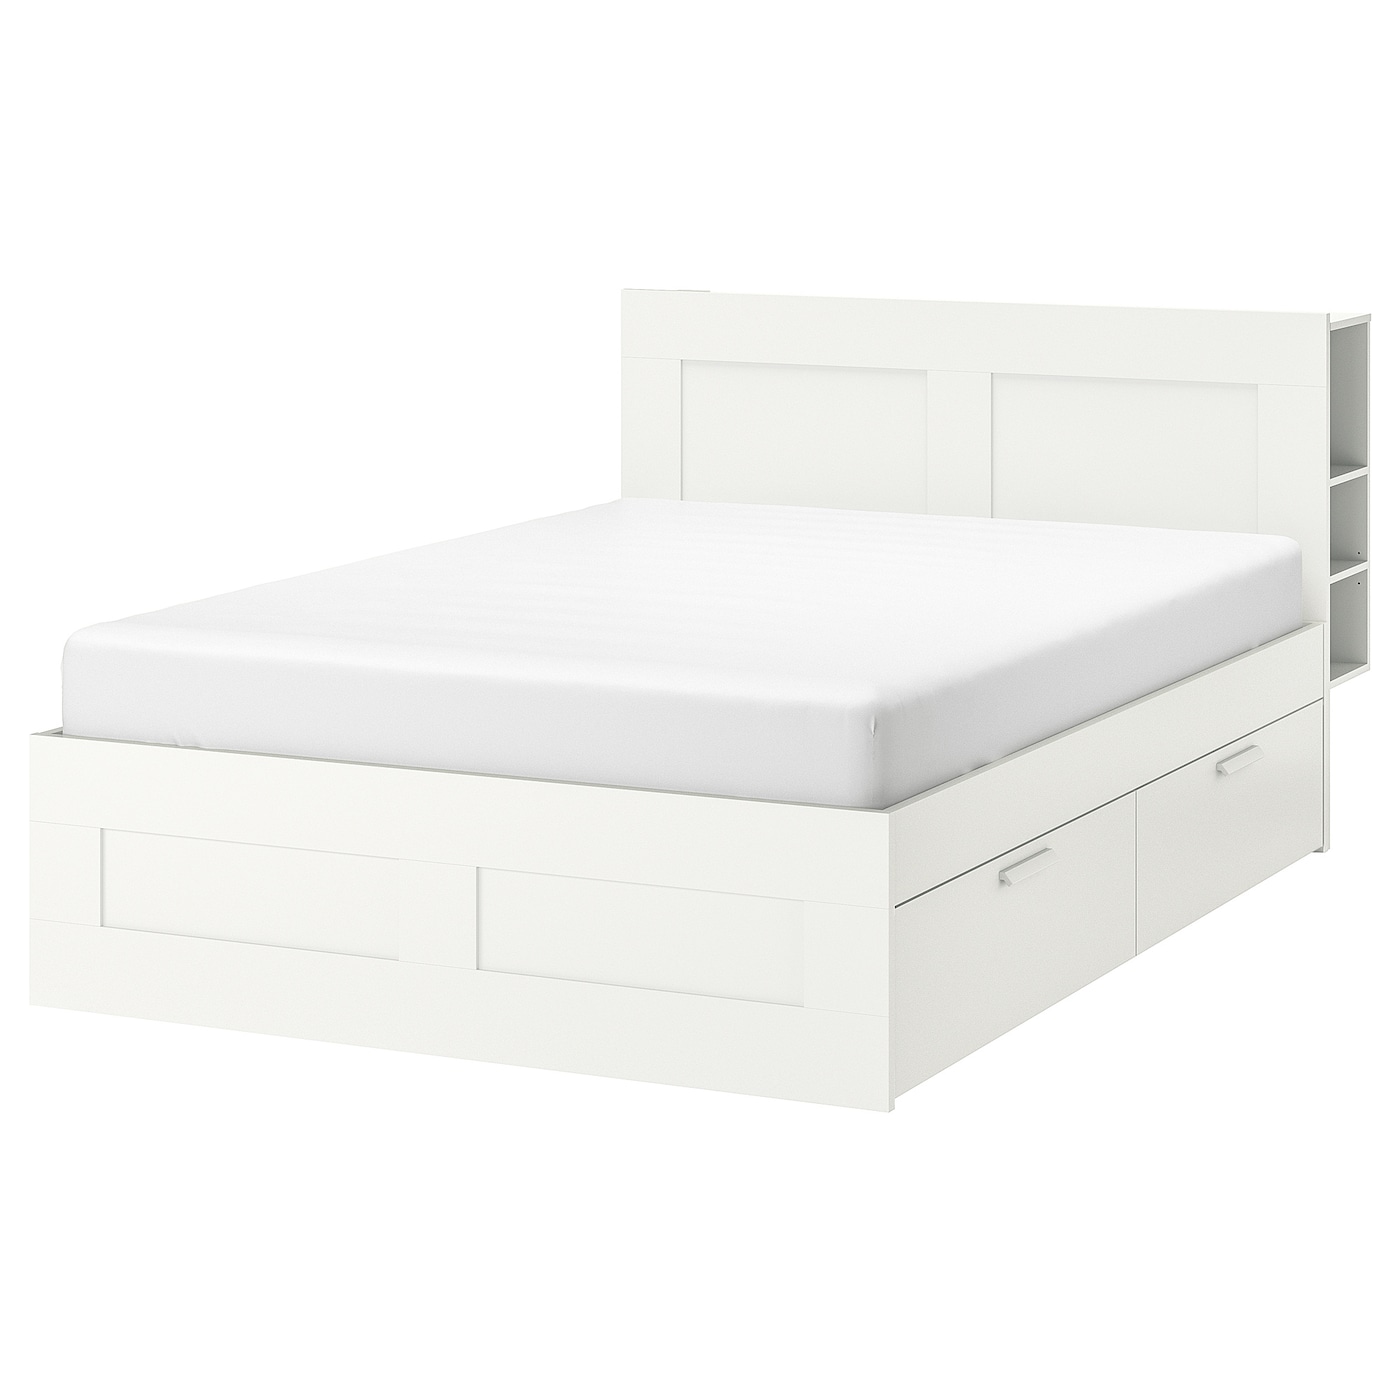 Каркас кровати с ящиком - IKEA BRIMNES, 200х160 см, белый, БРИМНЕС ИКЕА